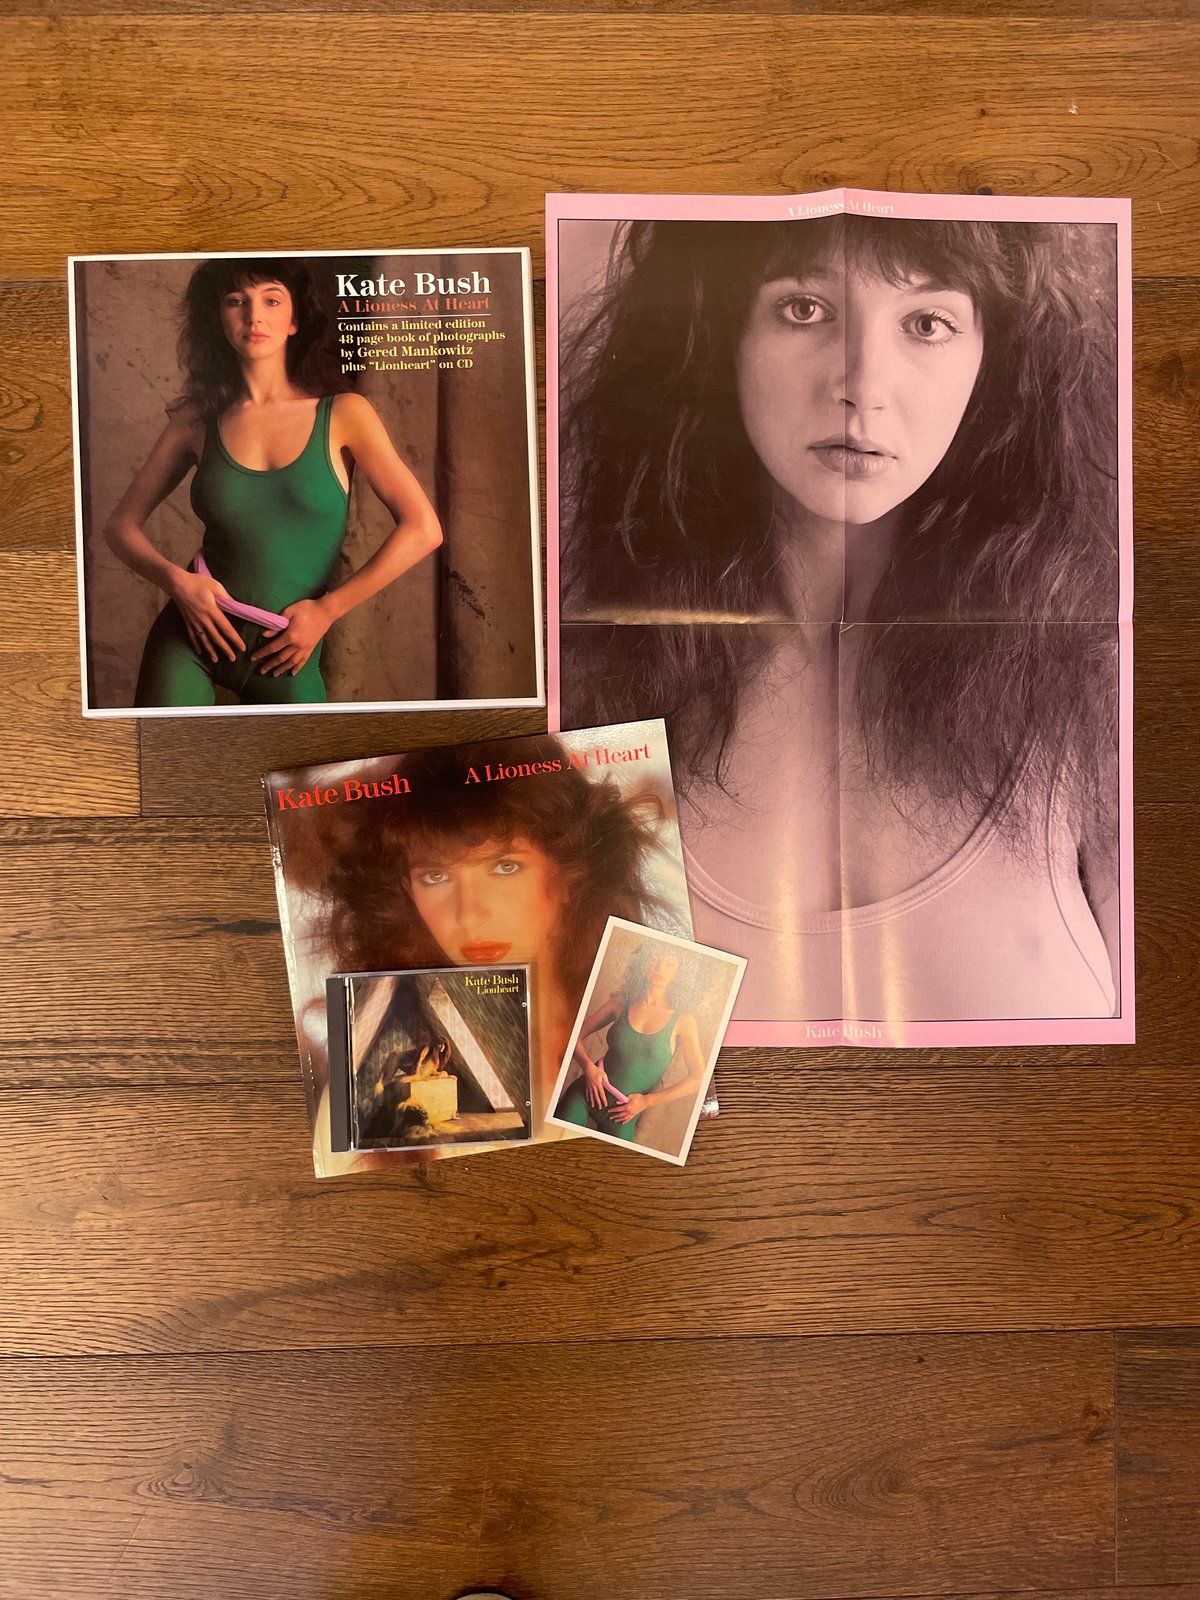 Kate Bush- A Lioness At Heart - CD and Book Box Set.